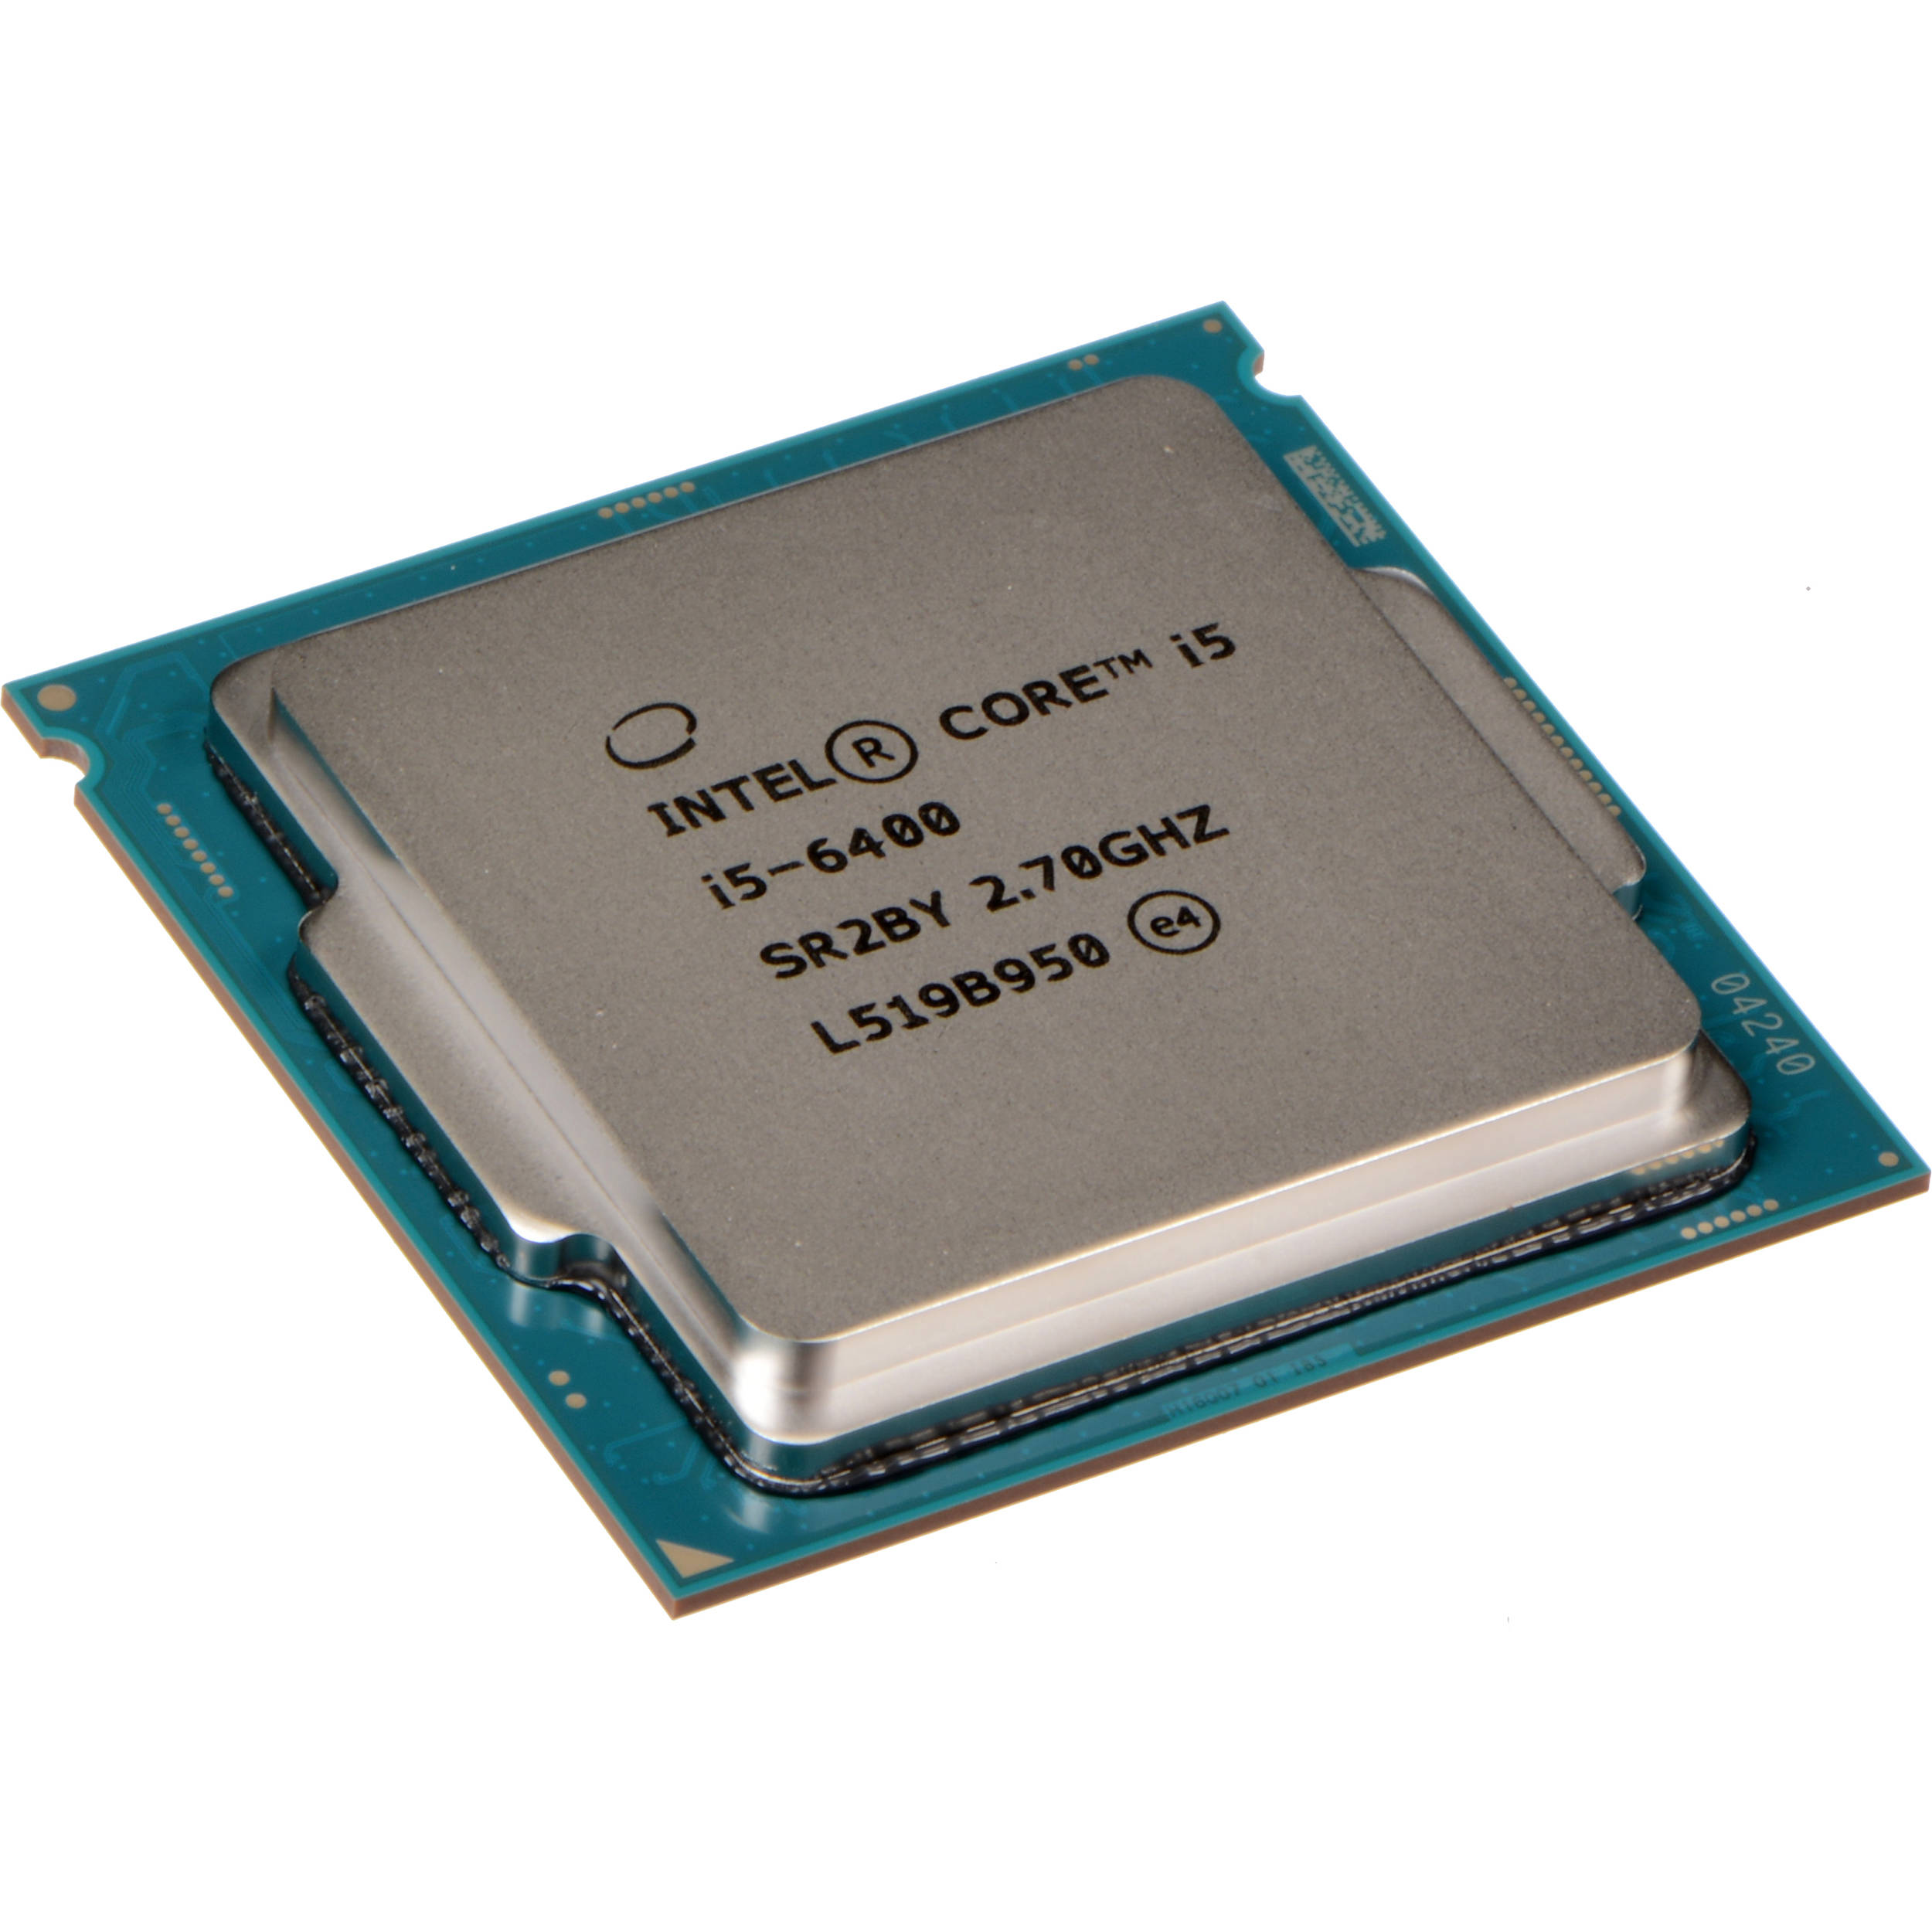 intel core 2 quad processor